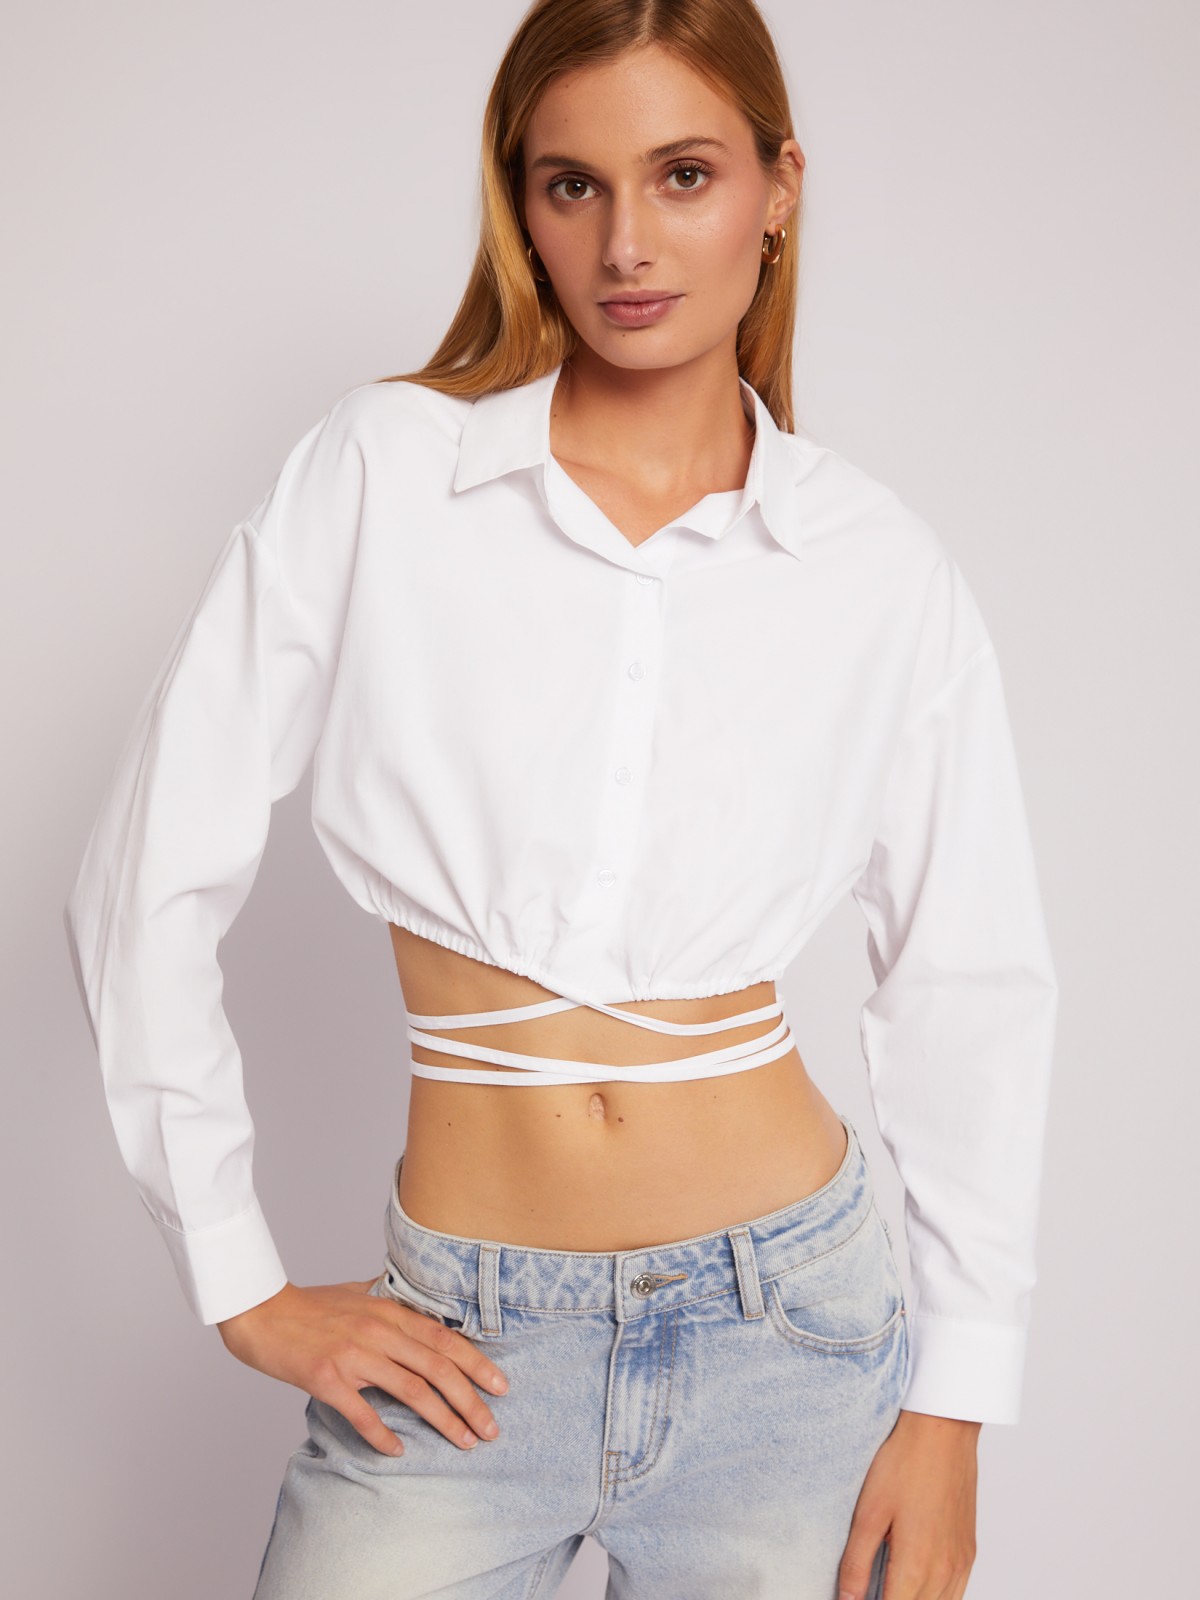 Укороченная блузка-рубашка с завязками zolla 02423118Y043, цвет белый, размер S